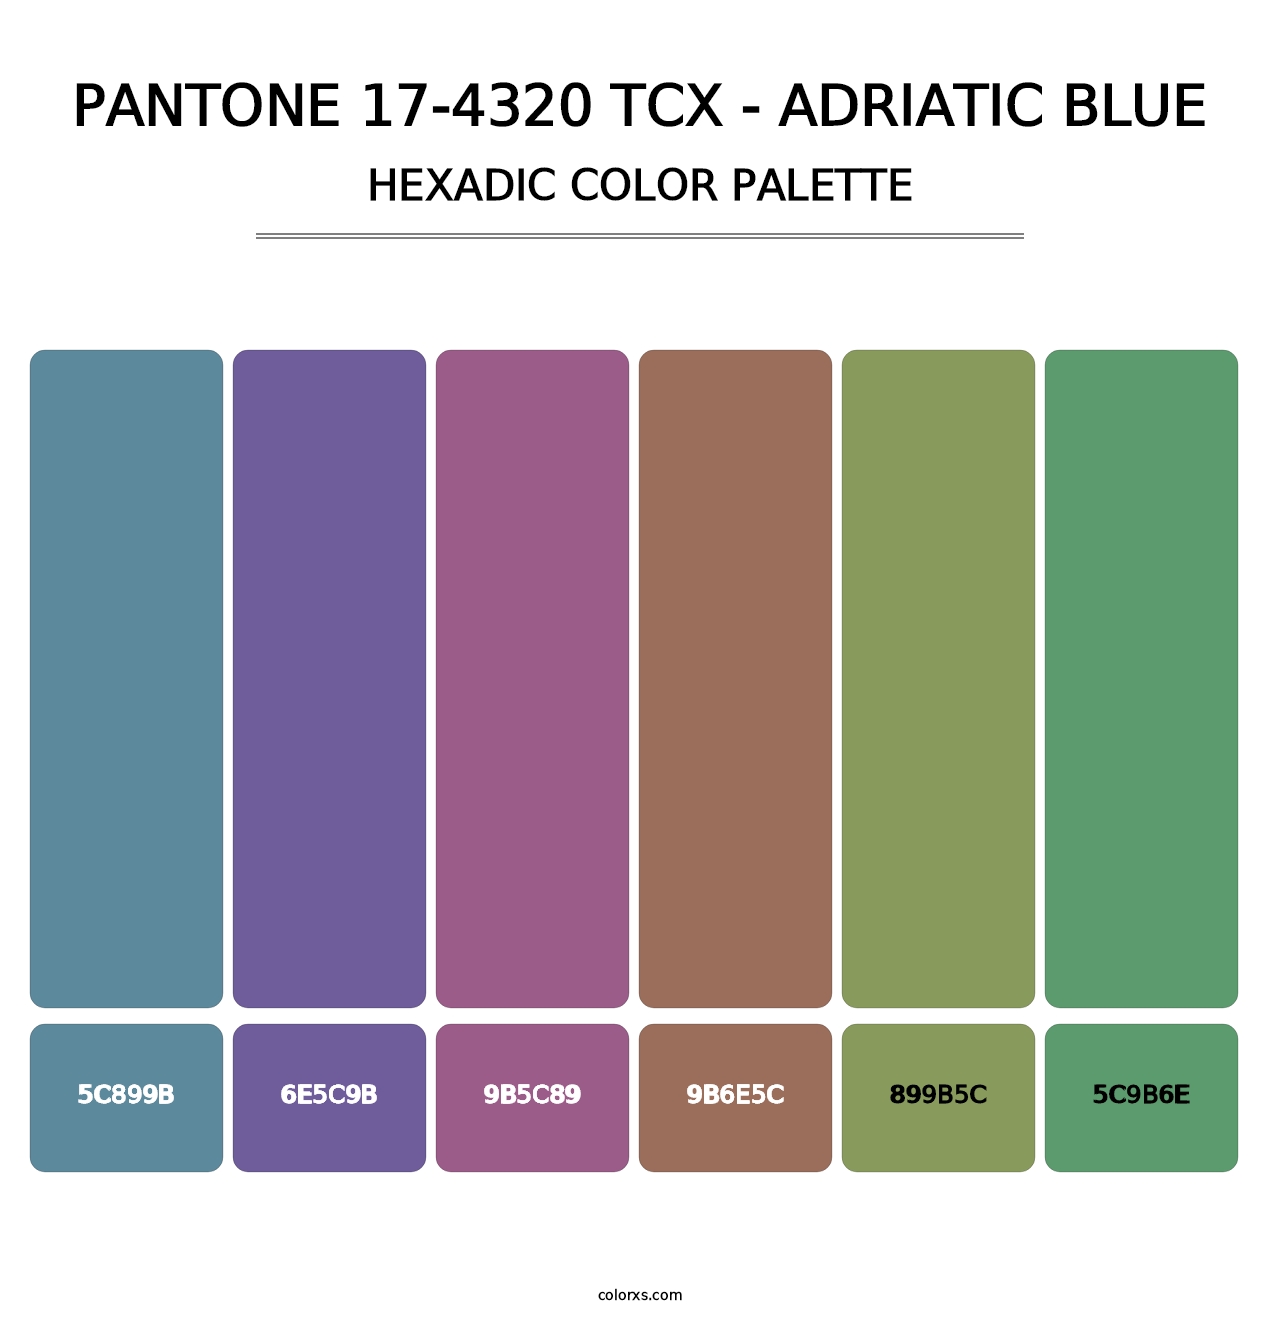 PANTONE 17-4320 TCX - Adriatic Blue - Hexadic Color Palette